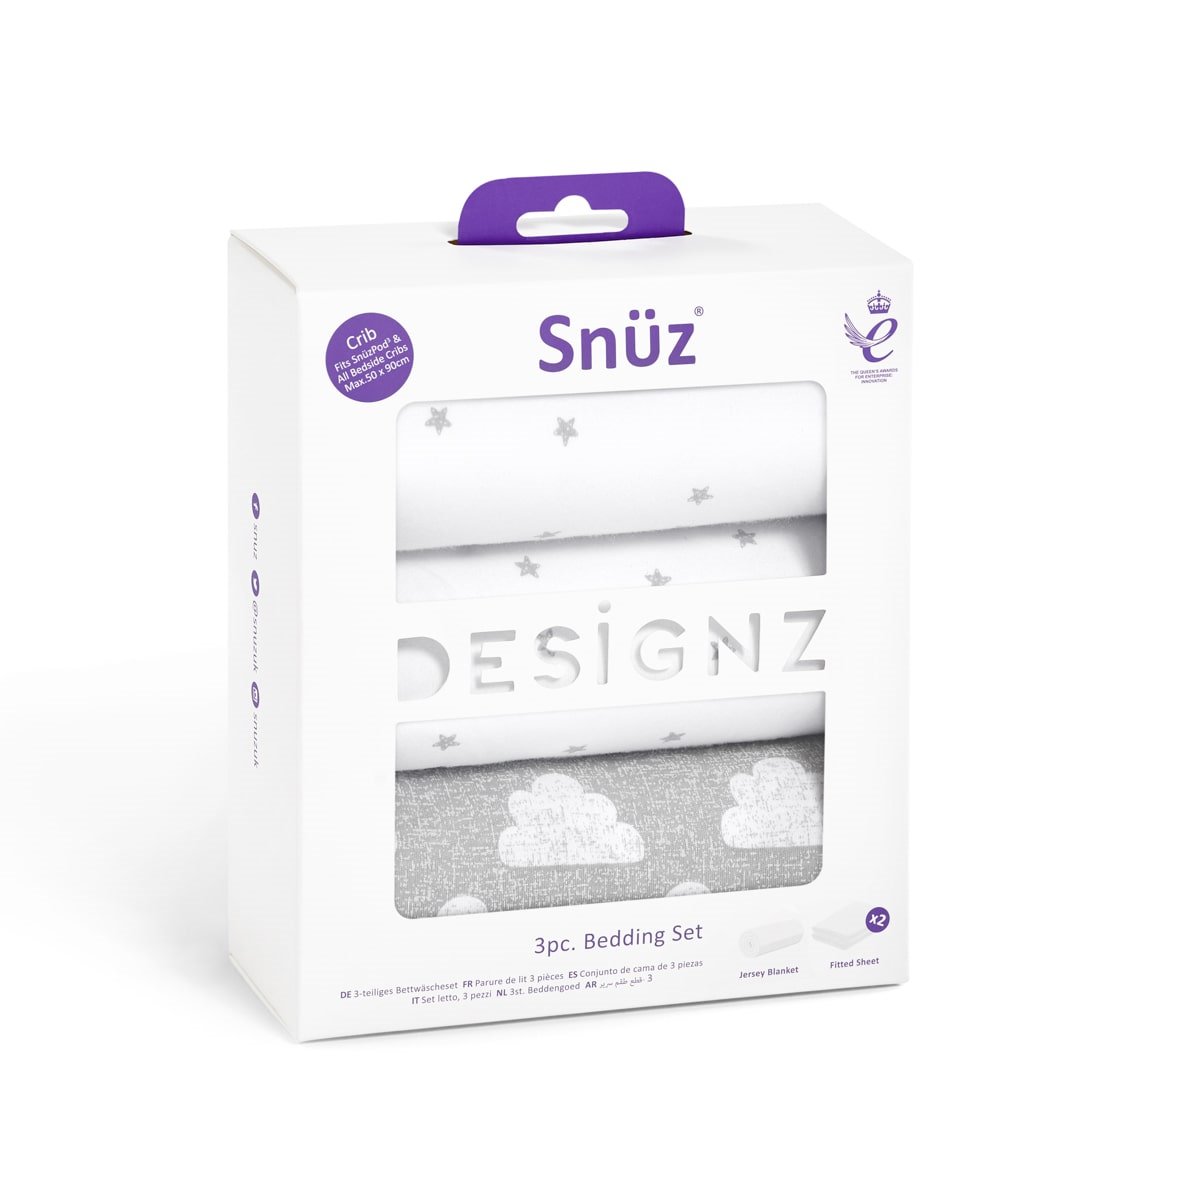 Crib Bedding Set in Cloud Print | Snuz 